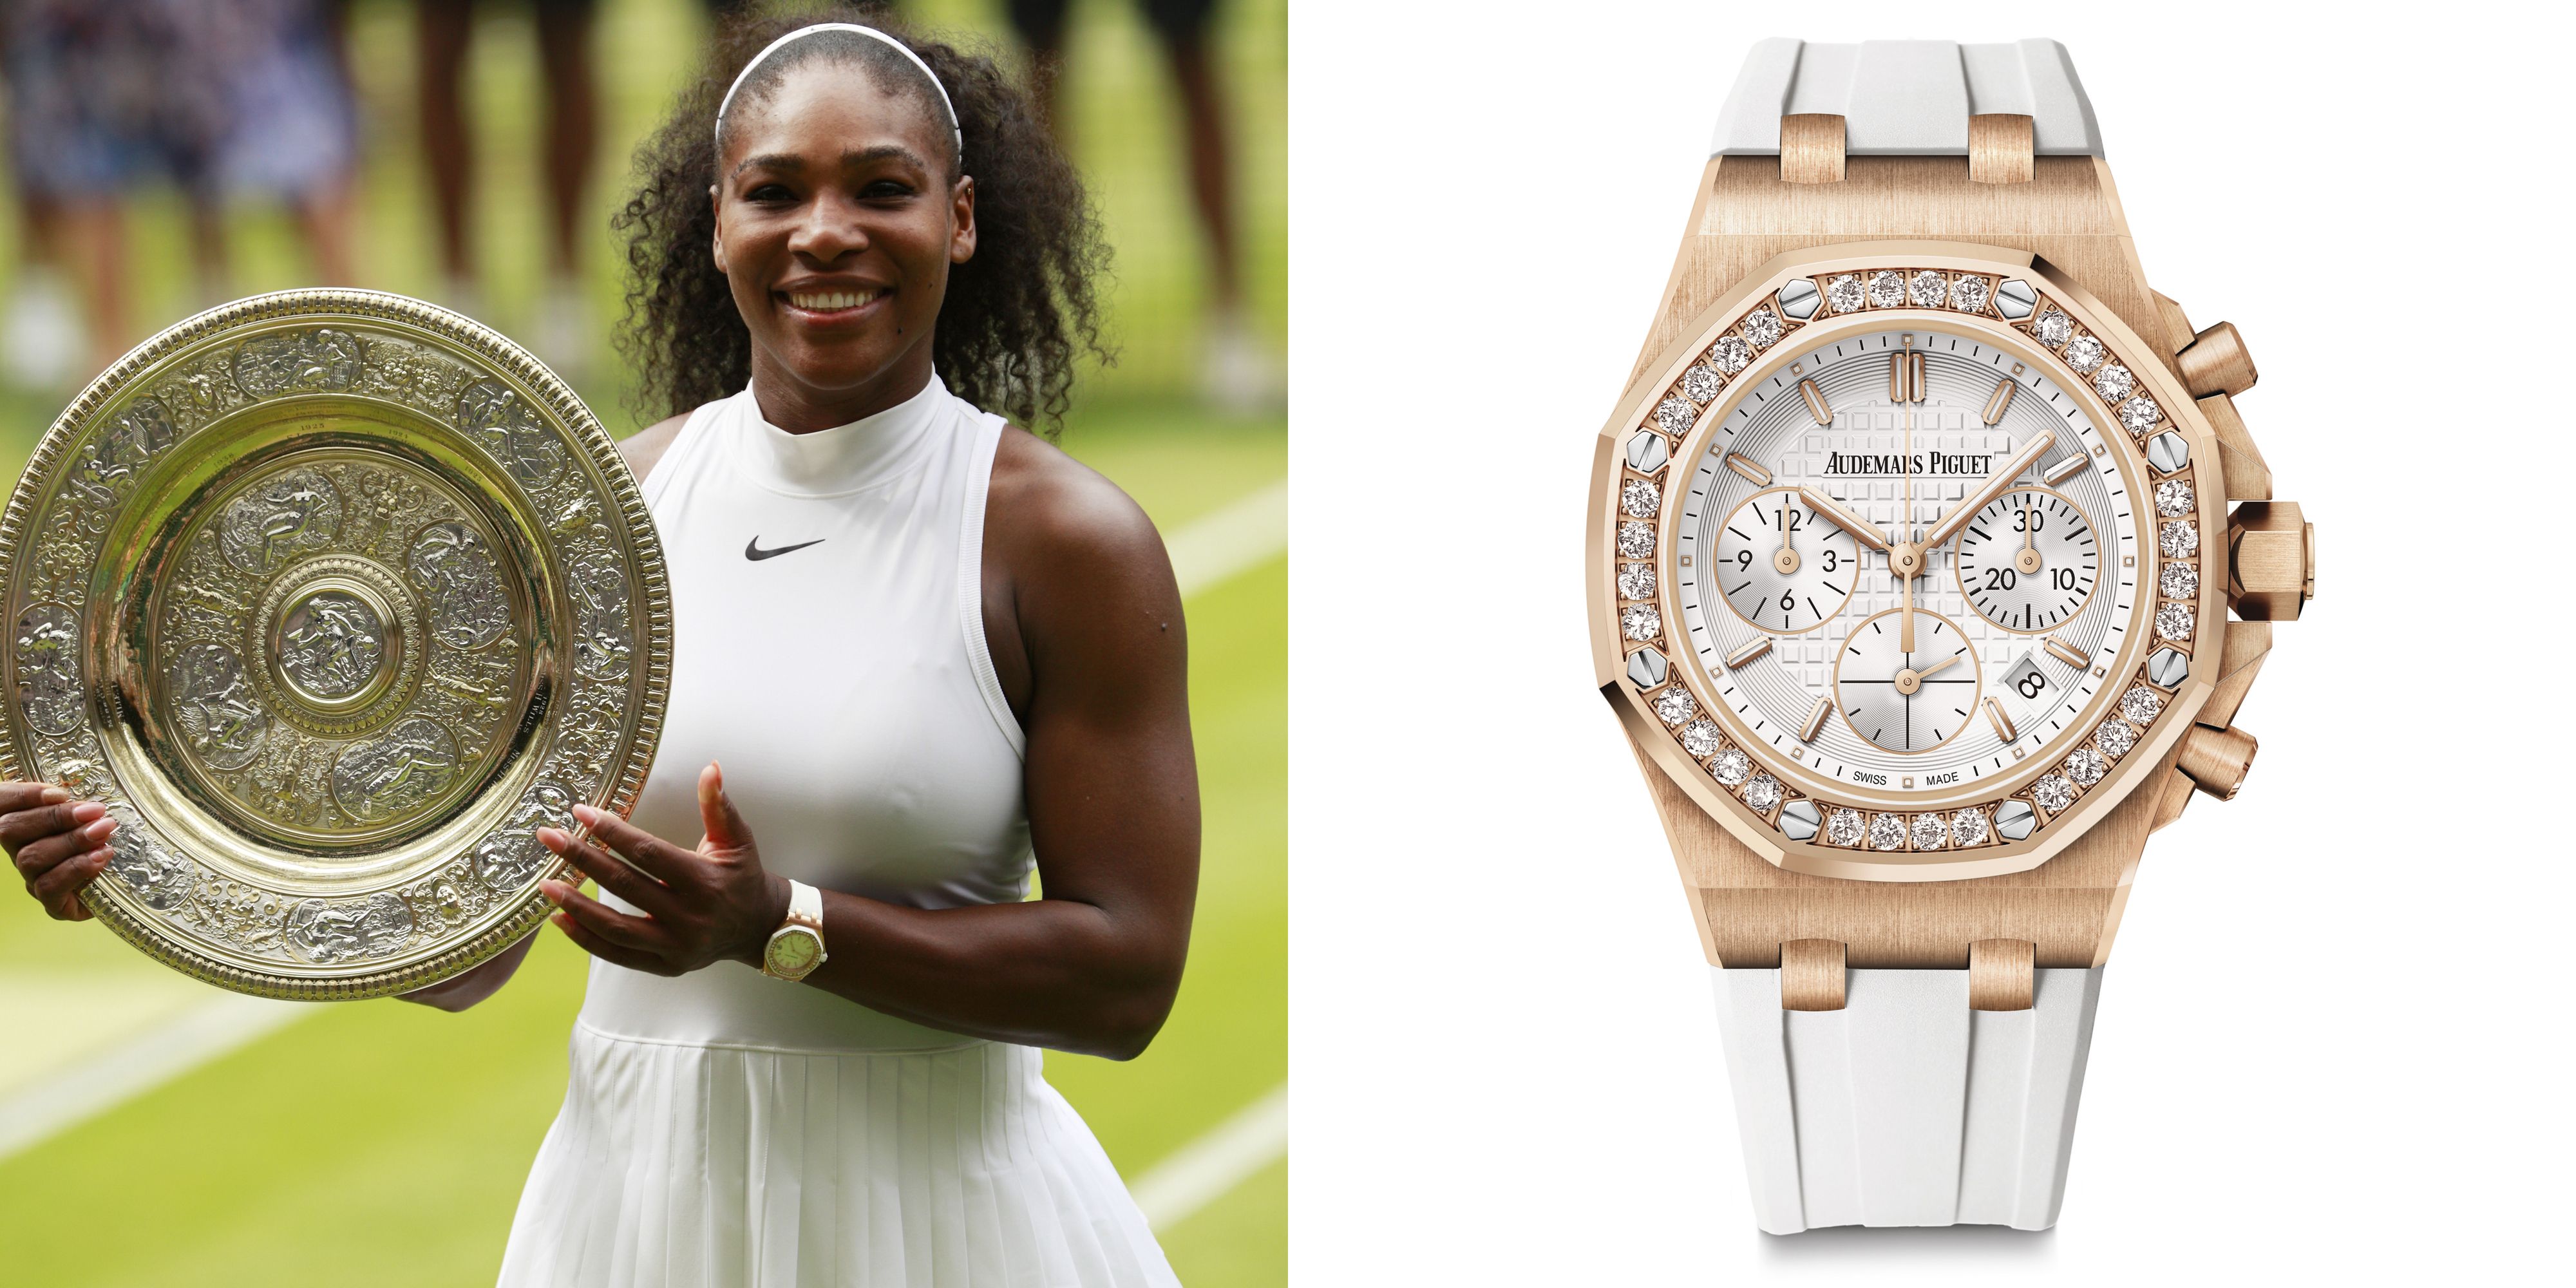 Watch History: Serena Williams 